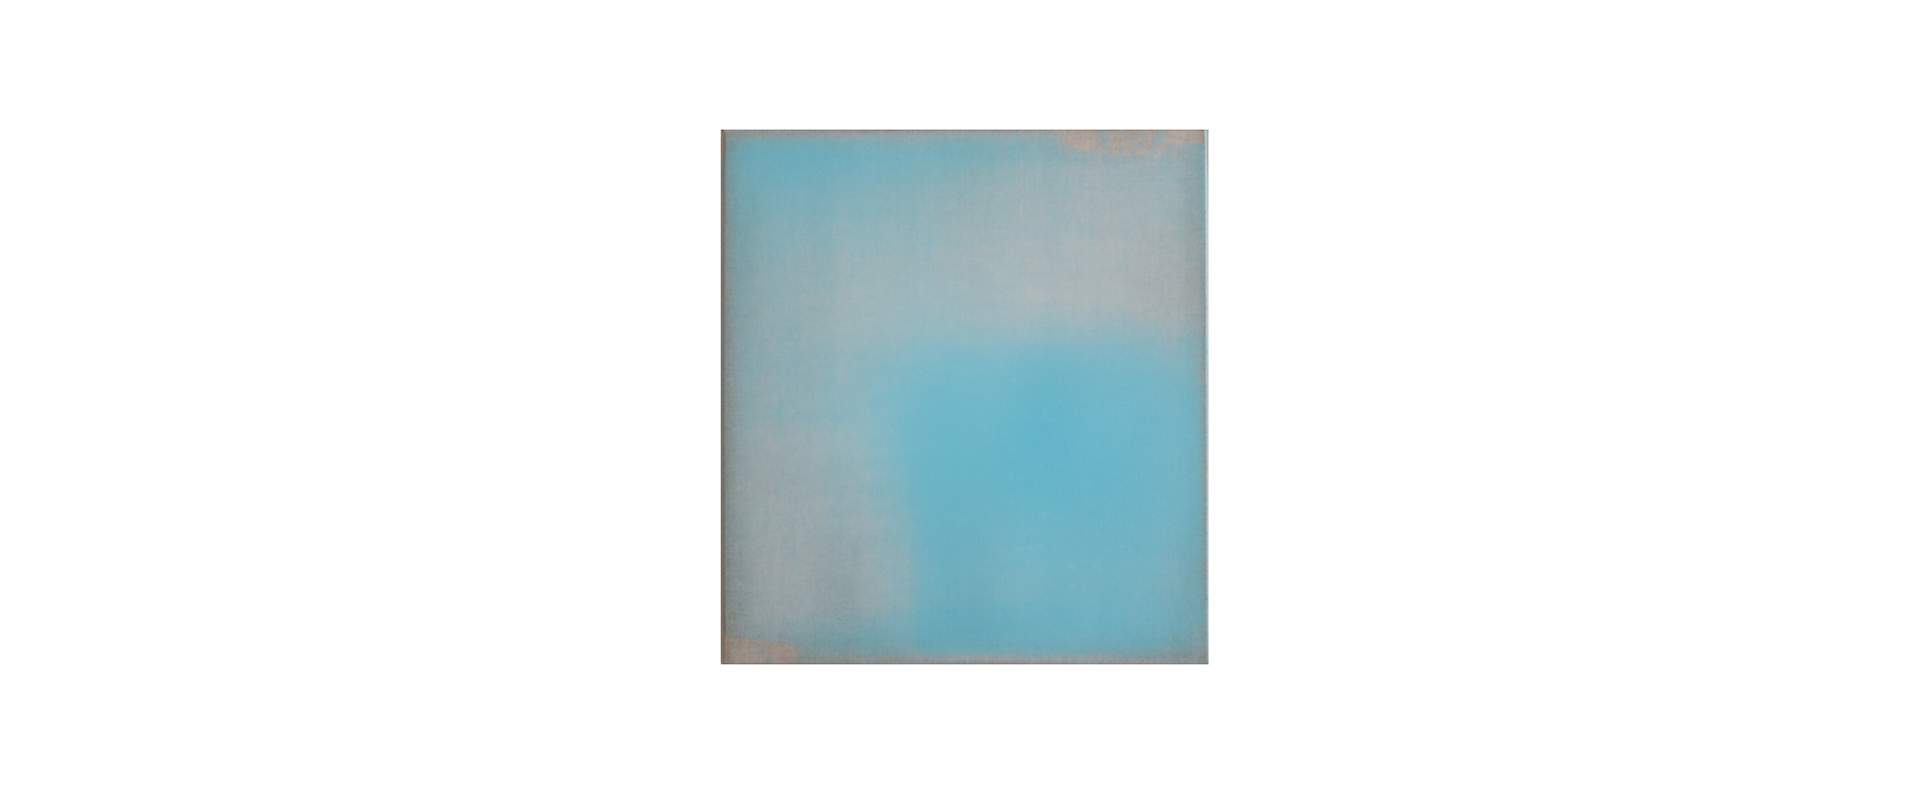 20200516 – 2020, Acryl auf Leinwand, 50 x 45 cm